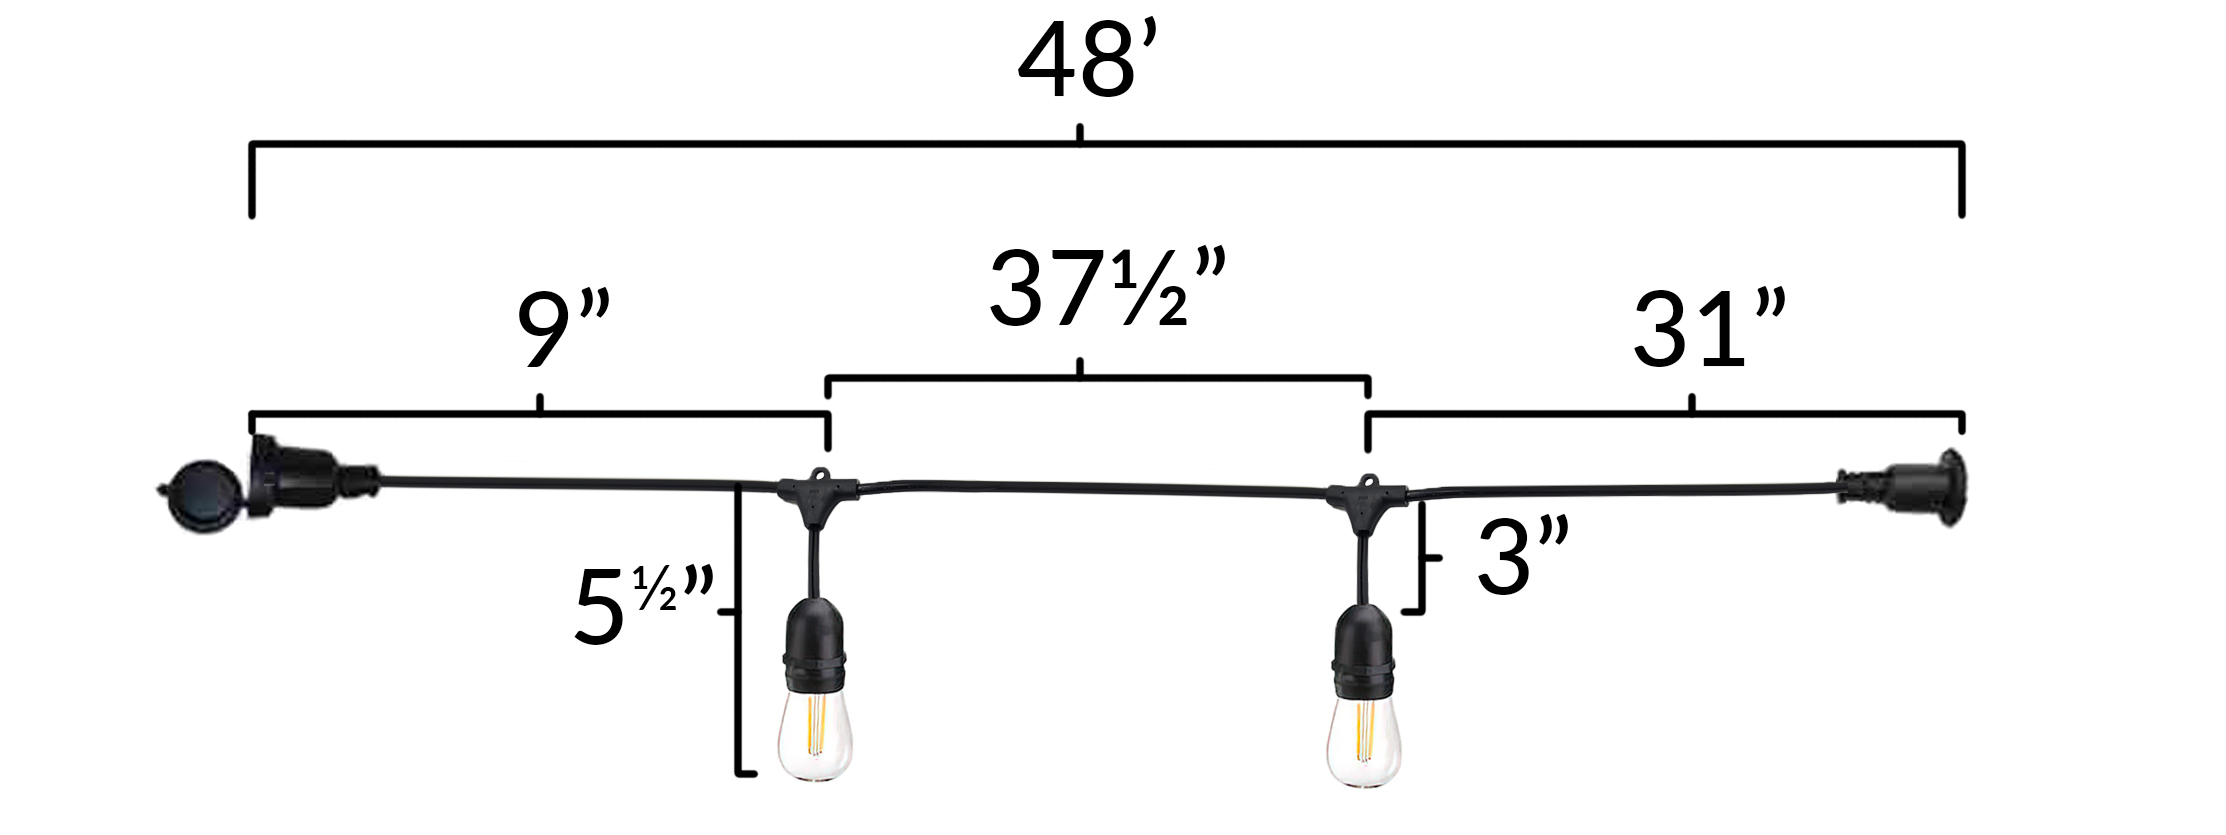 15 Light Decorative Vintage LED Light String Dimensions Diagram